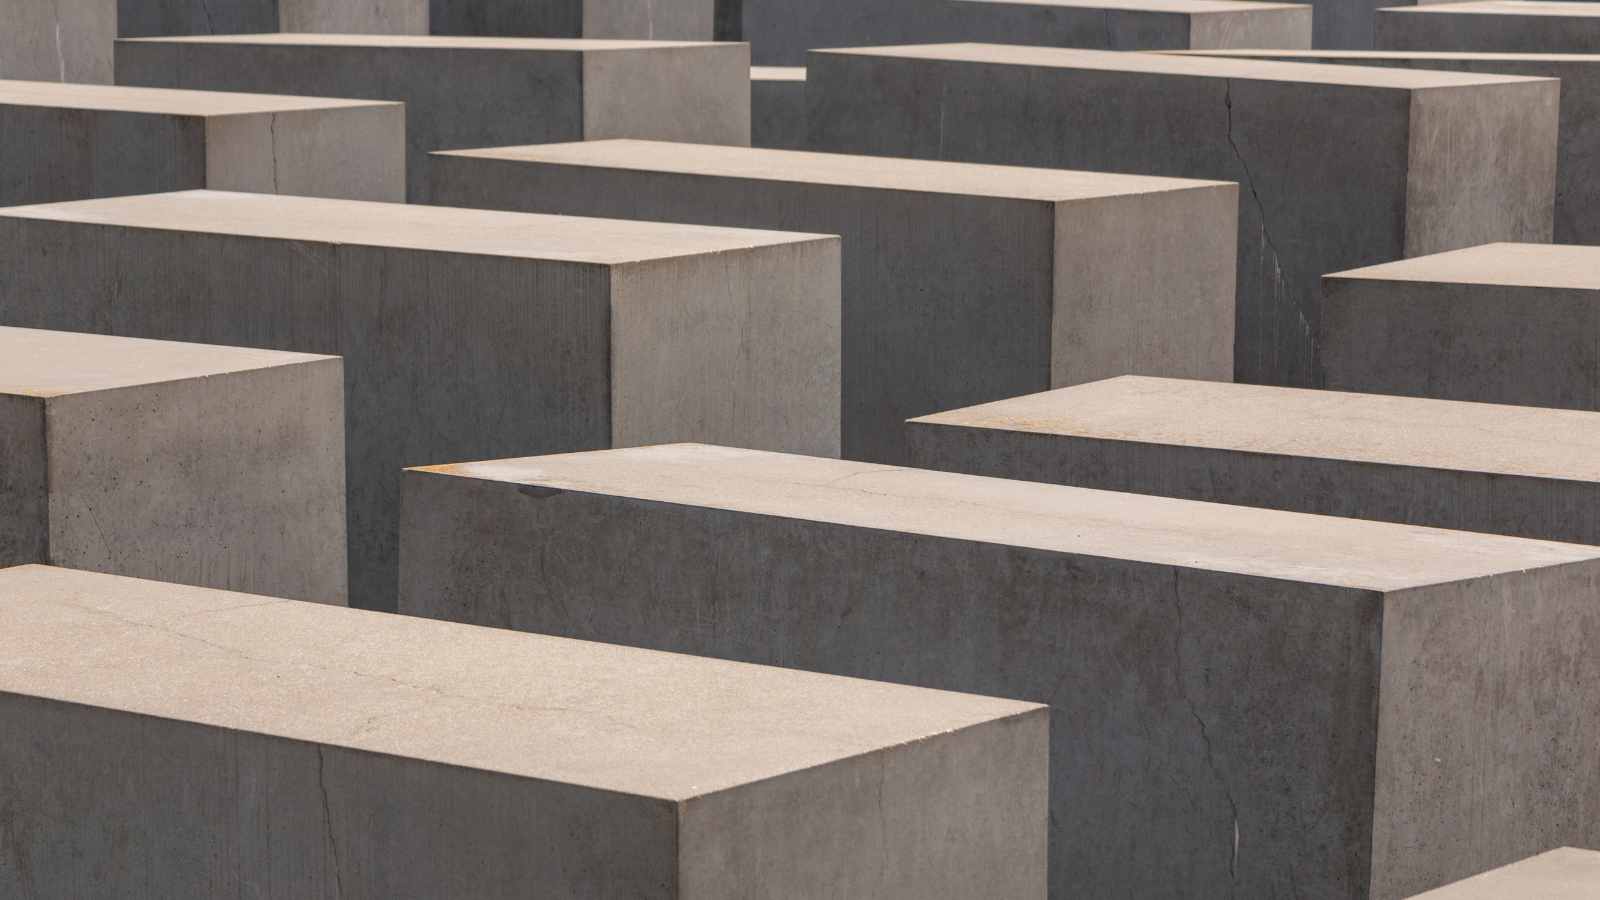 27 enero: Memorial Day, holocaust monument in Berlín.